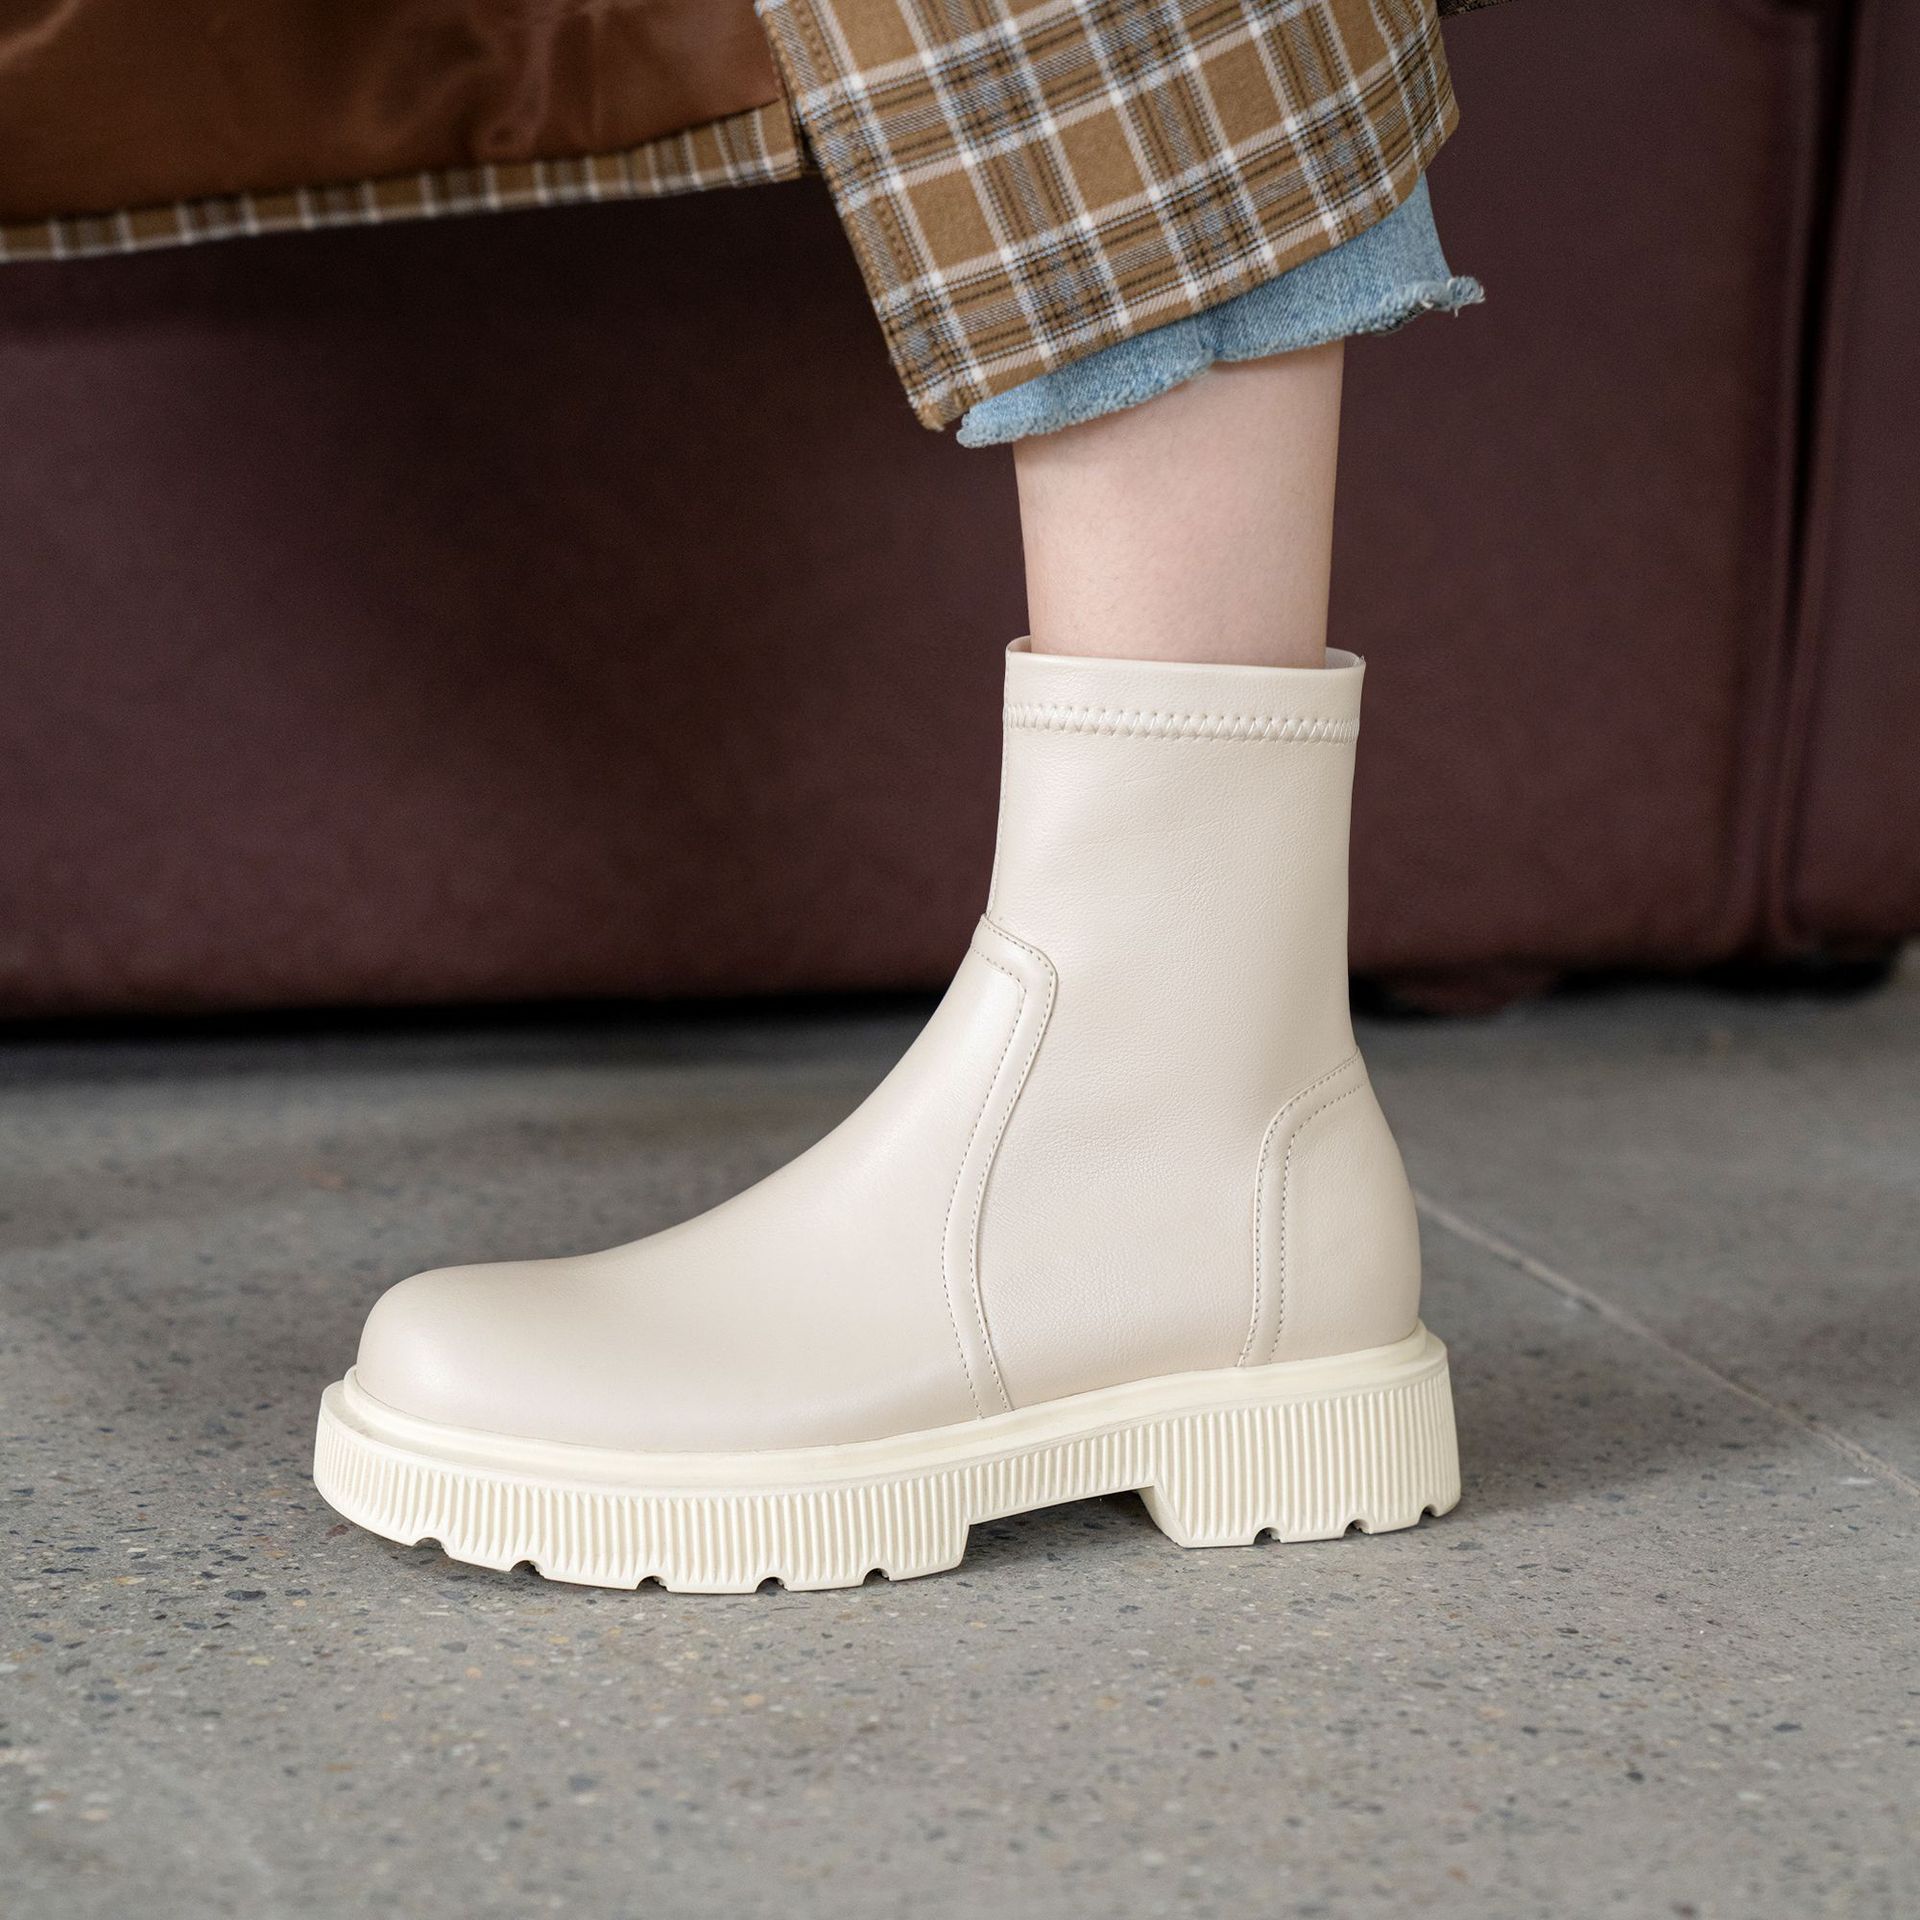 Chiko Eloina Round Toe Block Heels Boots